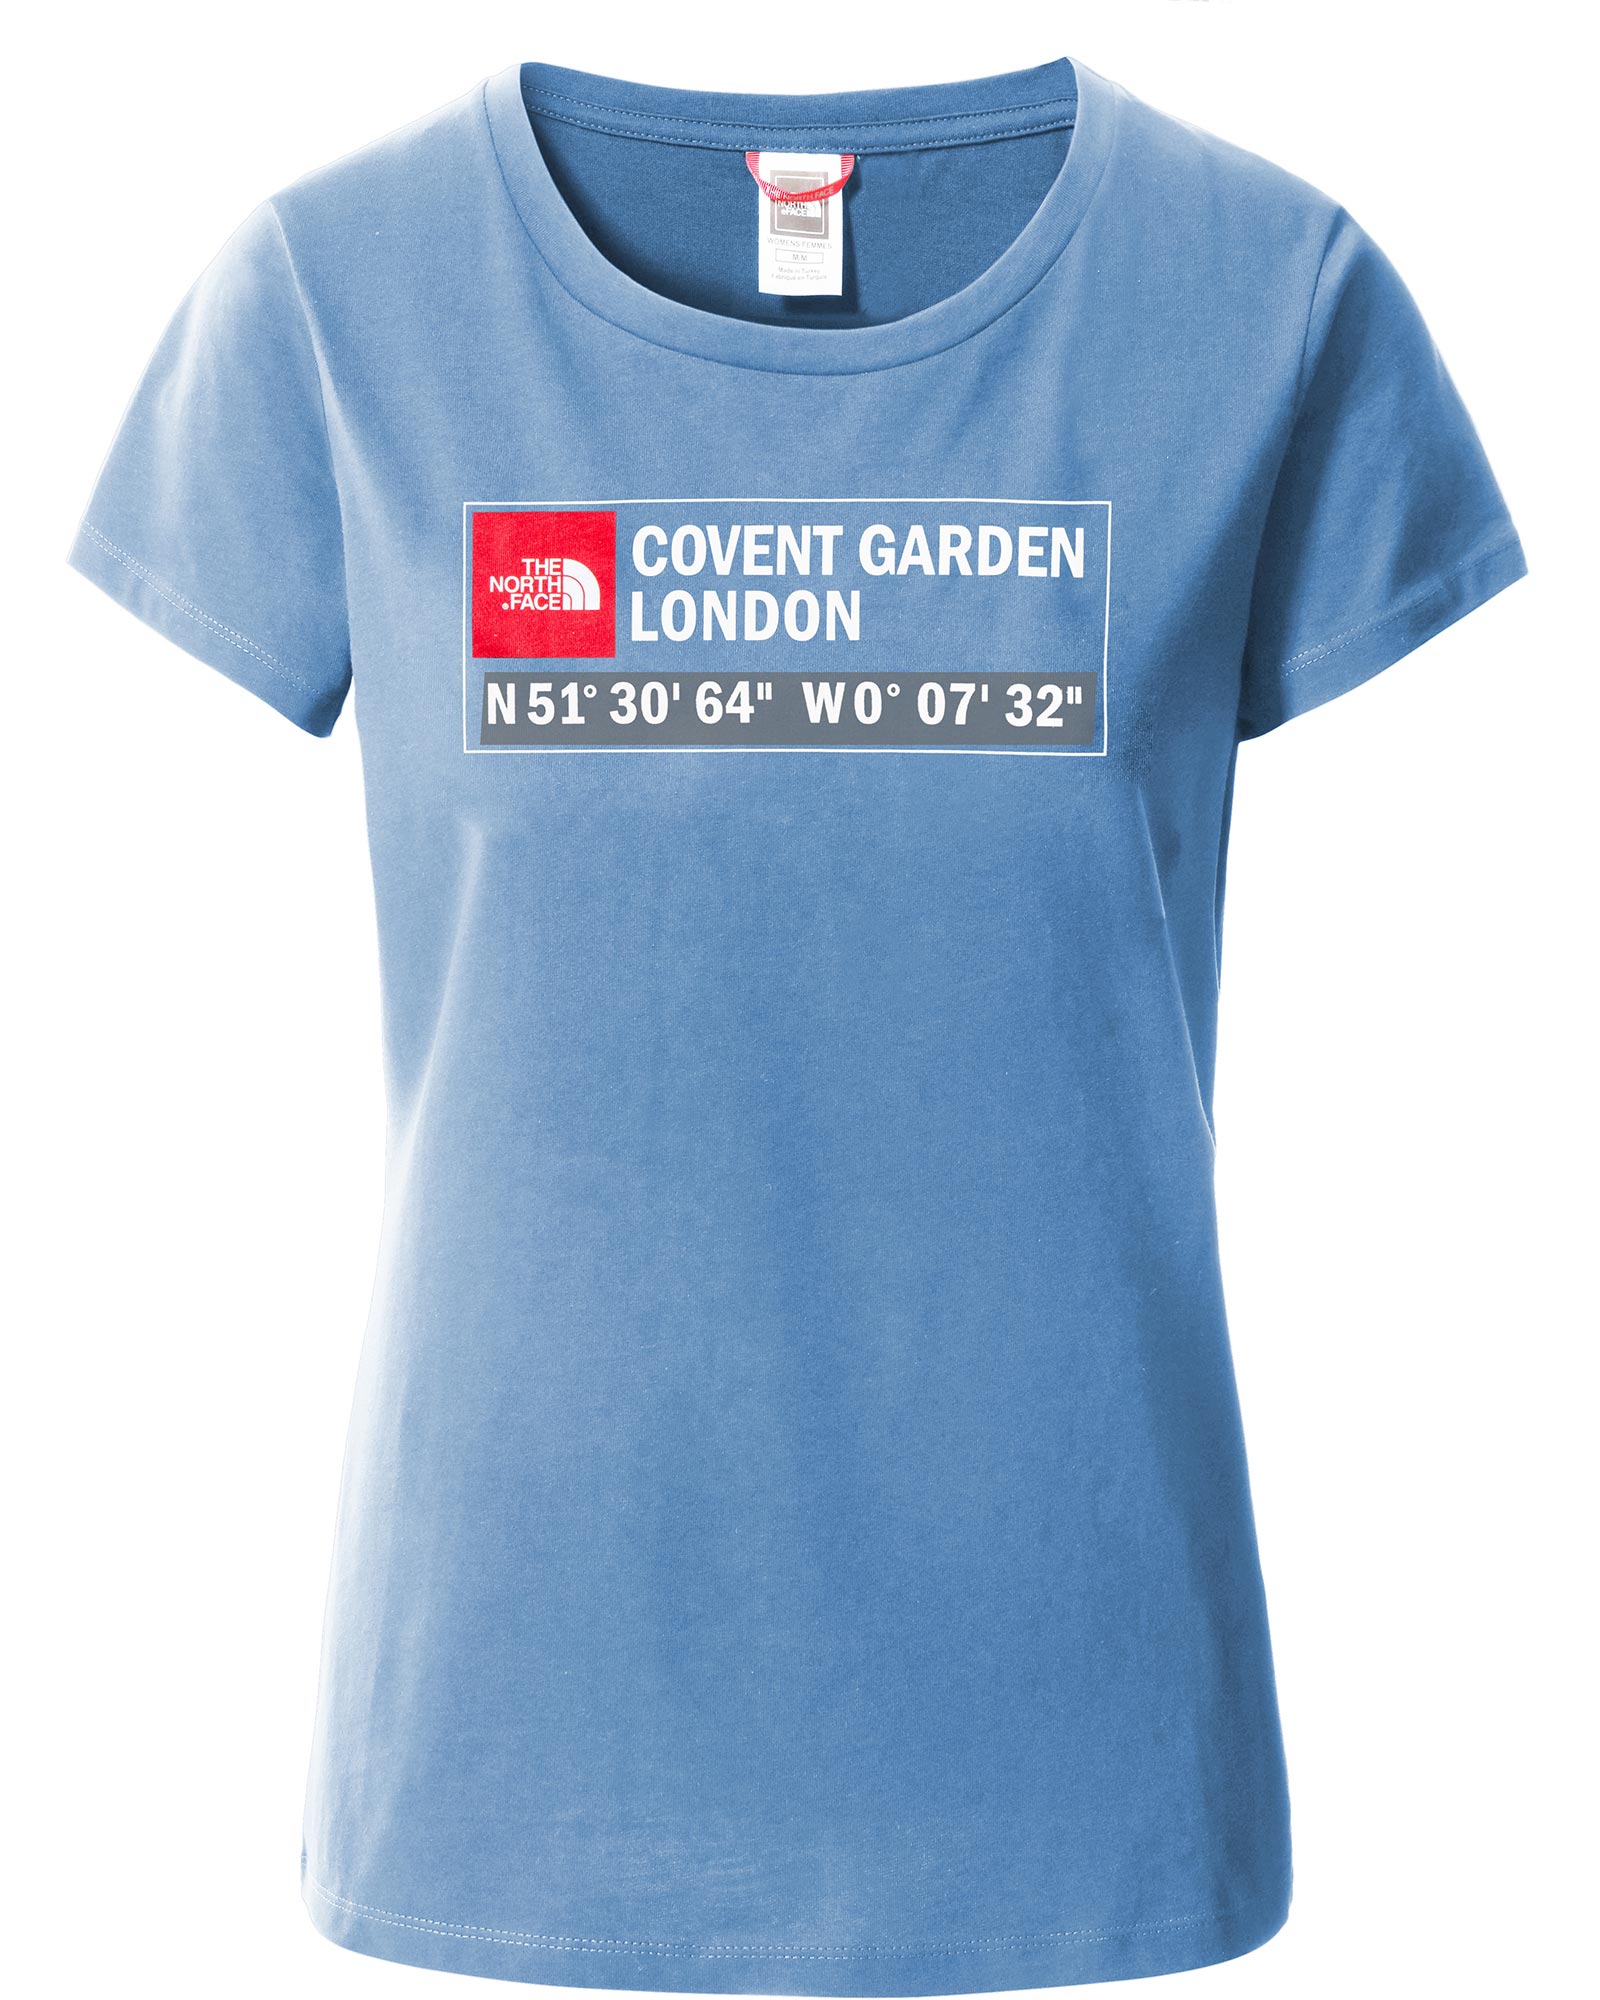 The North Face Covent Garden GPS Logo Women’s T Shirt - Vintage Blue XL